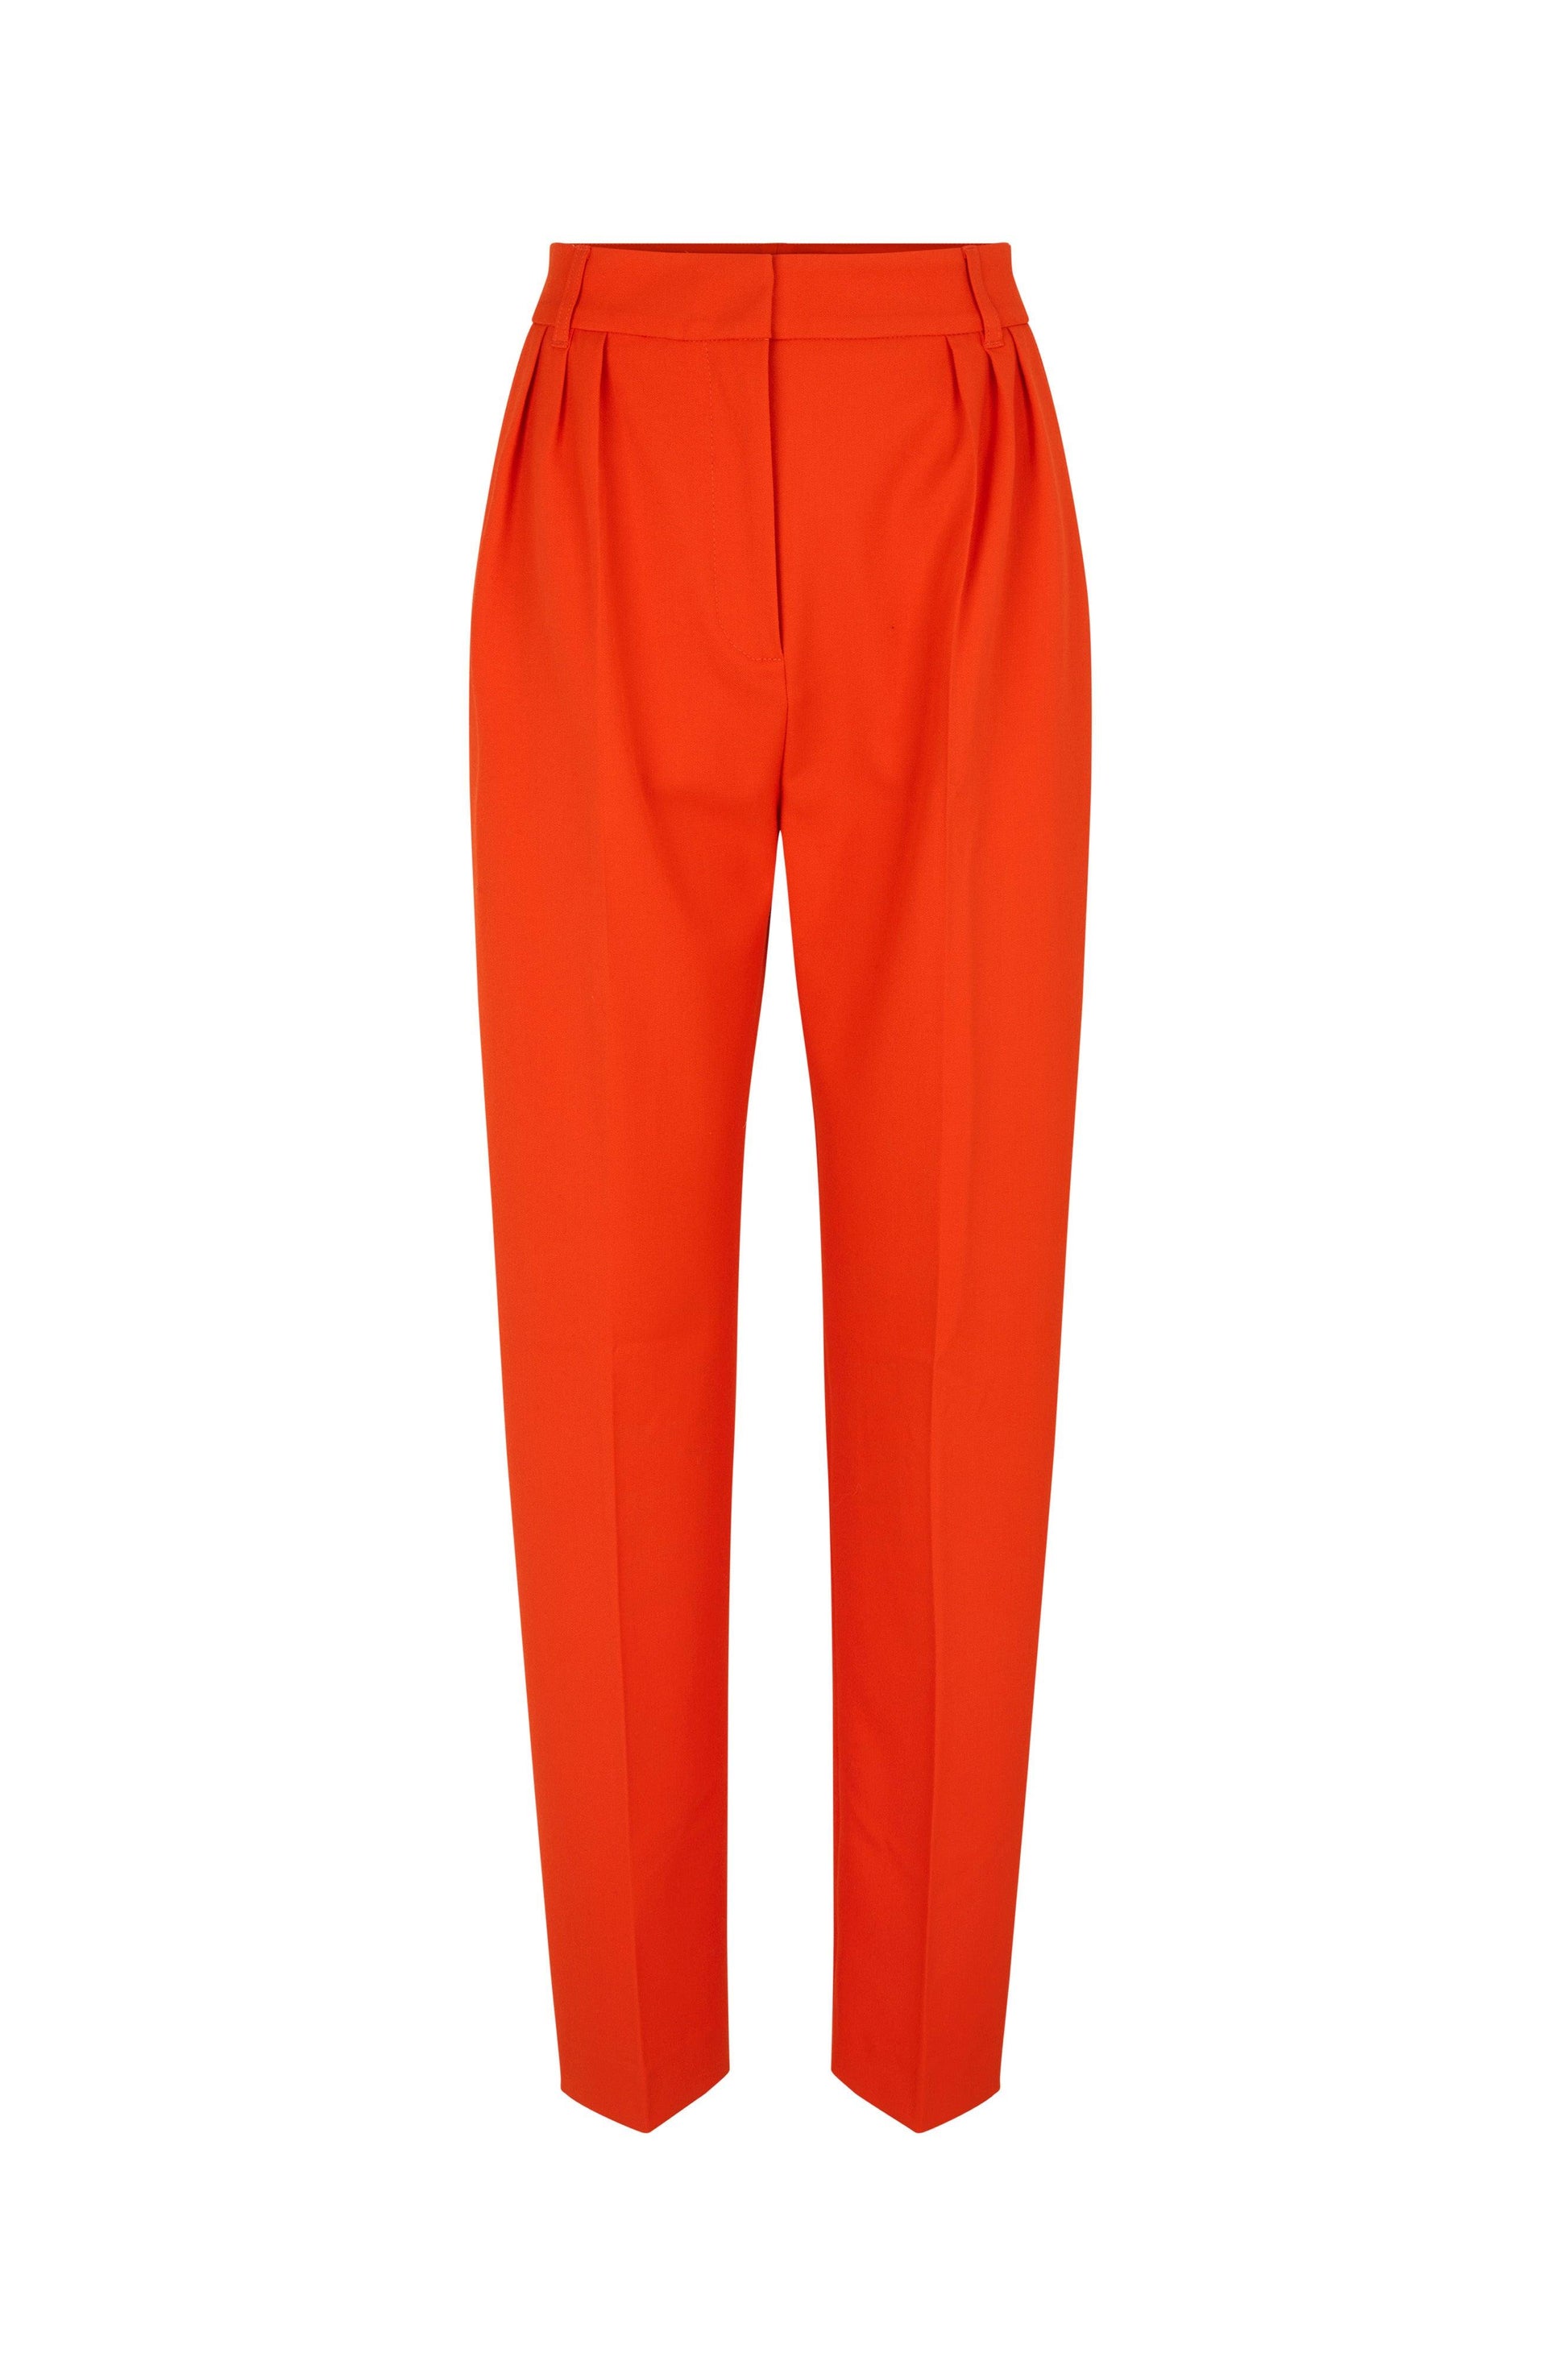 Samsoe Samsoe - Meme Orange Tailored Trousers - 32 The Guild